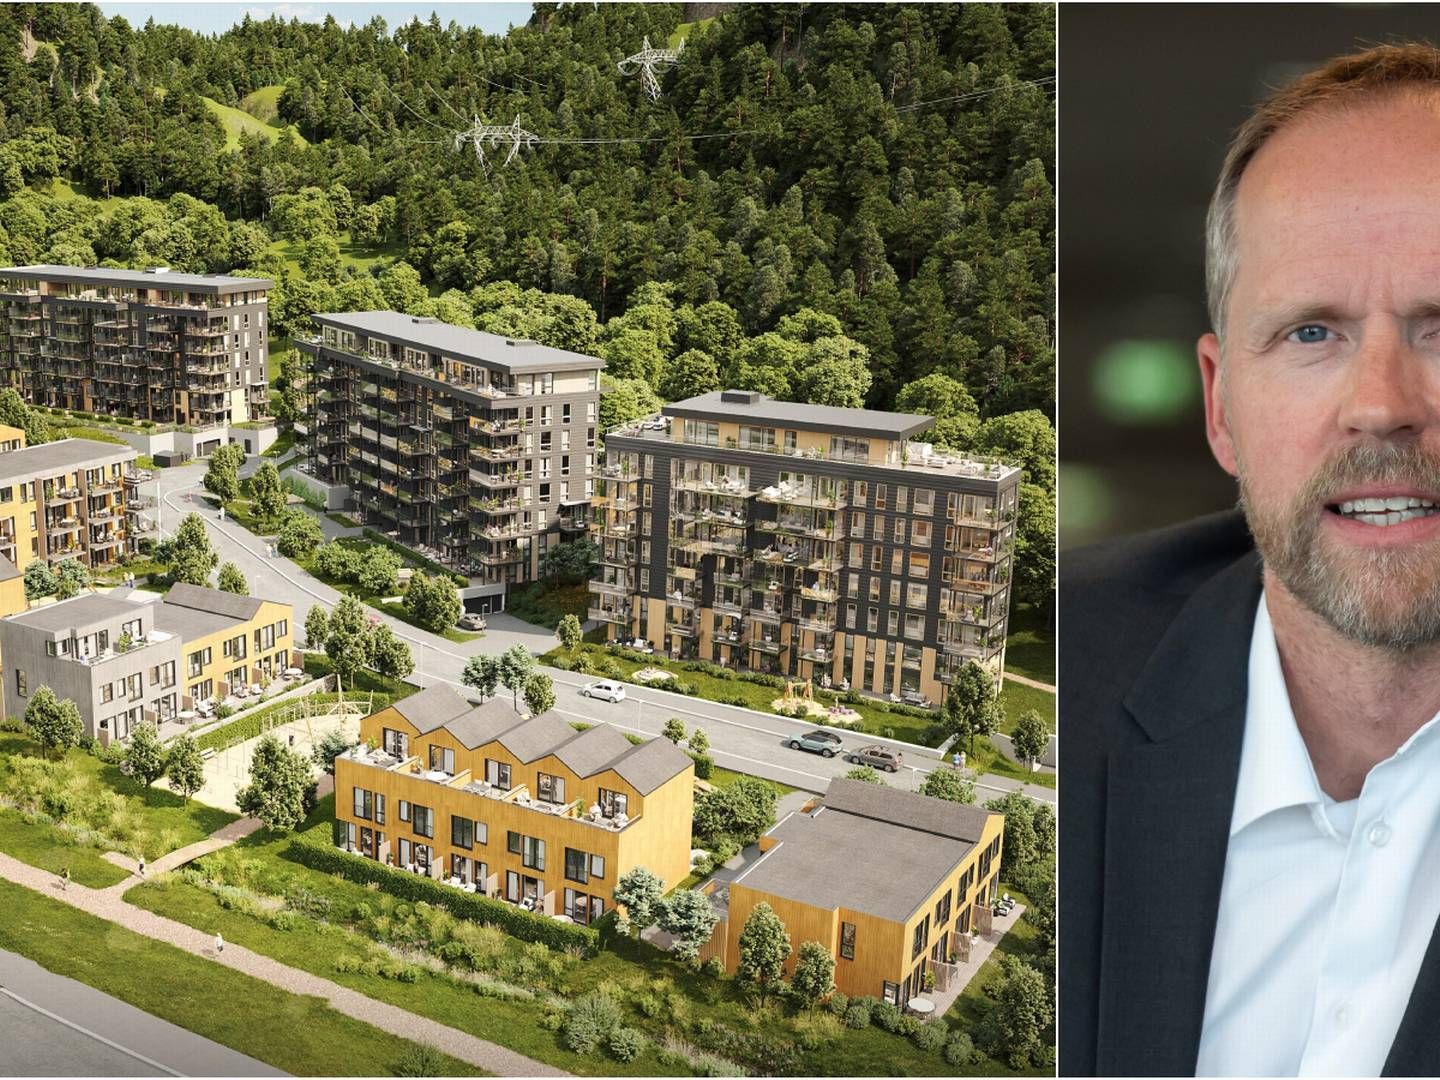 LEIE TIL EIE: Administrerende direktør i Nordr Norge, Pål Aglen, går i gang med nytt konsept. | Foto: 3d Estate og Nordr